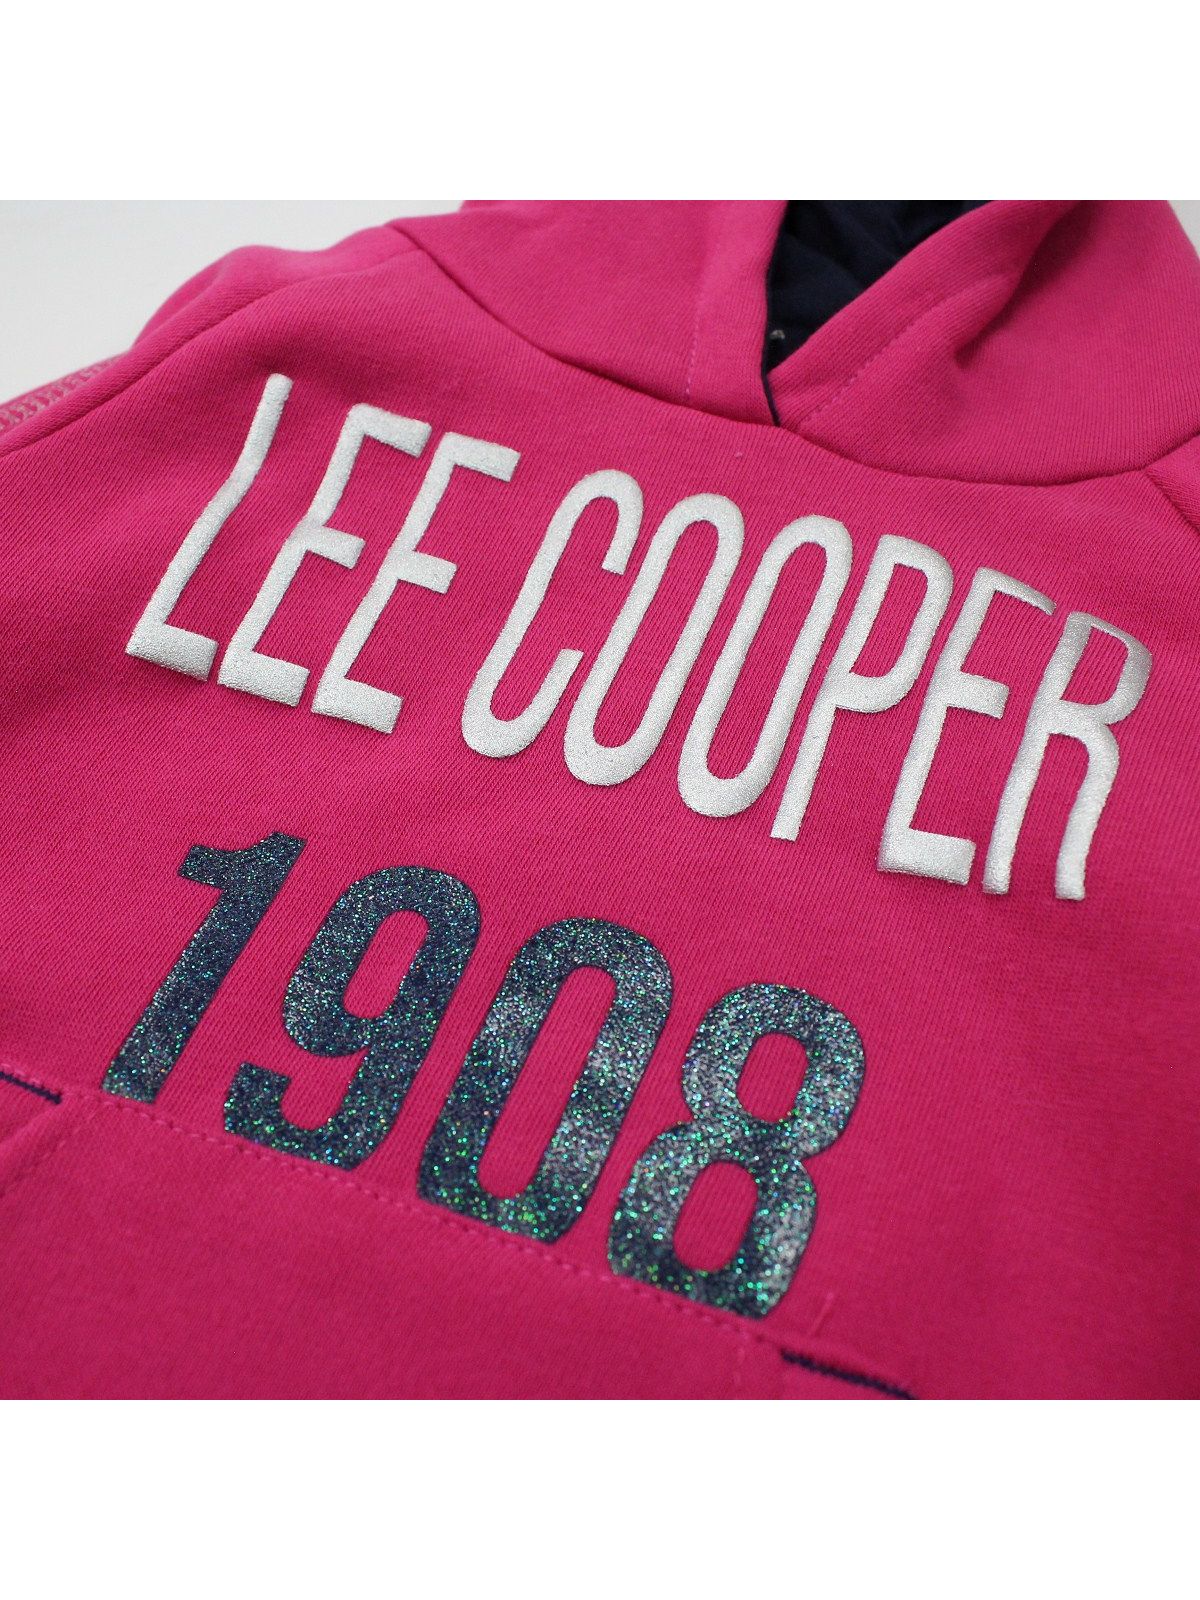 Lee Cooper Tracksuit